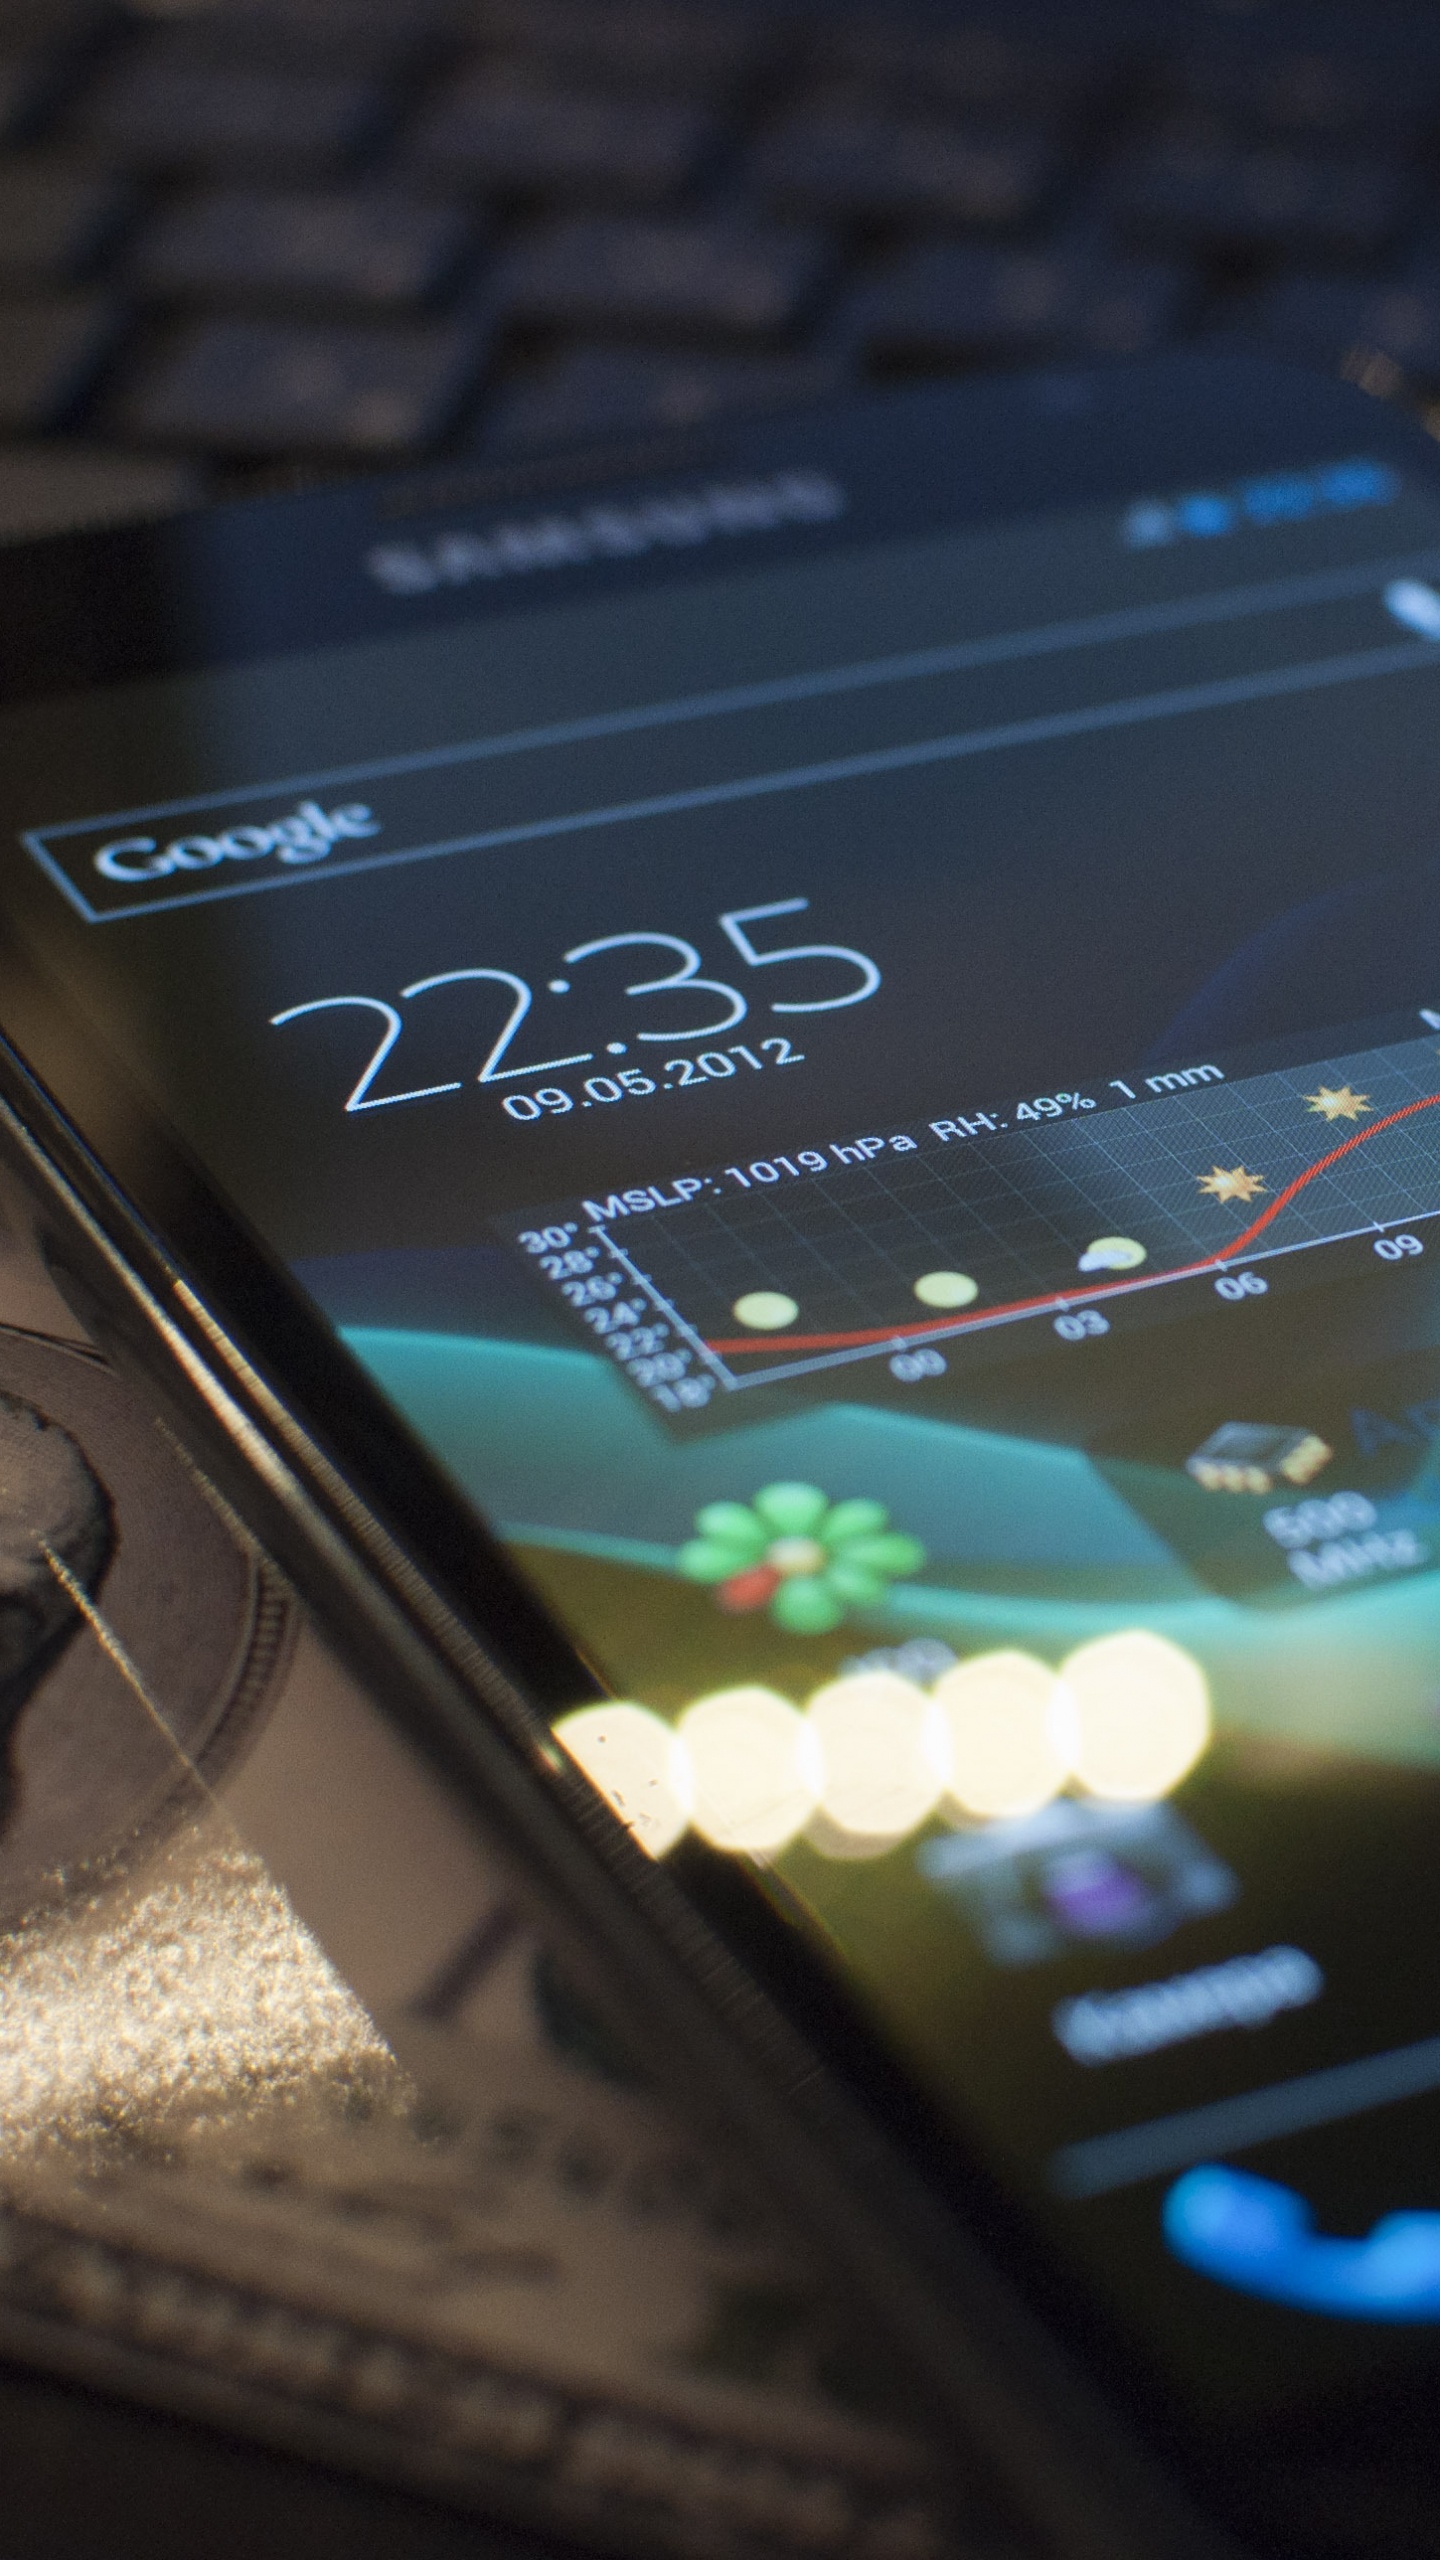 Samsung Negro Smartphone Android en Computadora Portátil Negra. Wallpaper in 1440x2560 Resolution